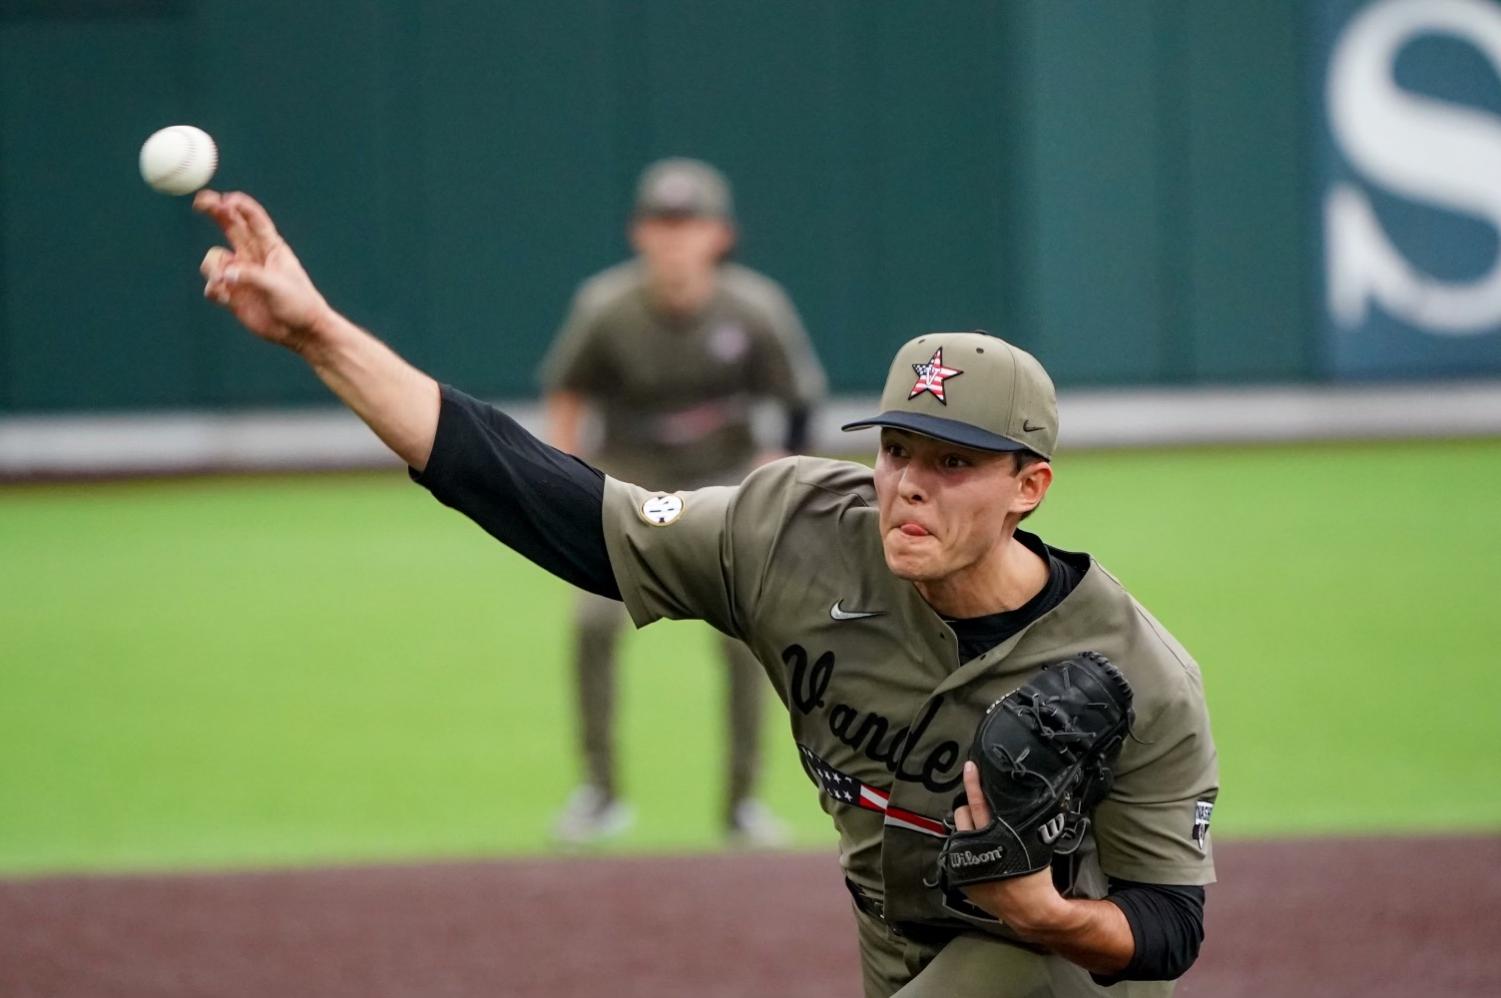 Vanderbilt Baseball on X: Rocking our Salute to Service unis